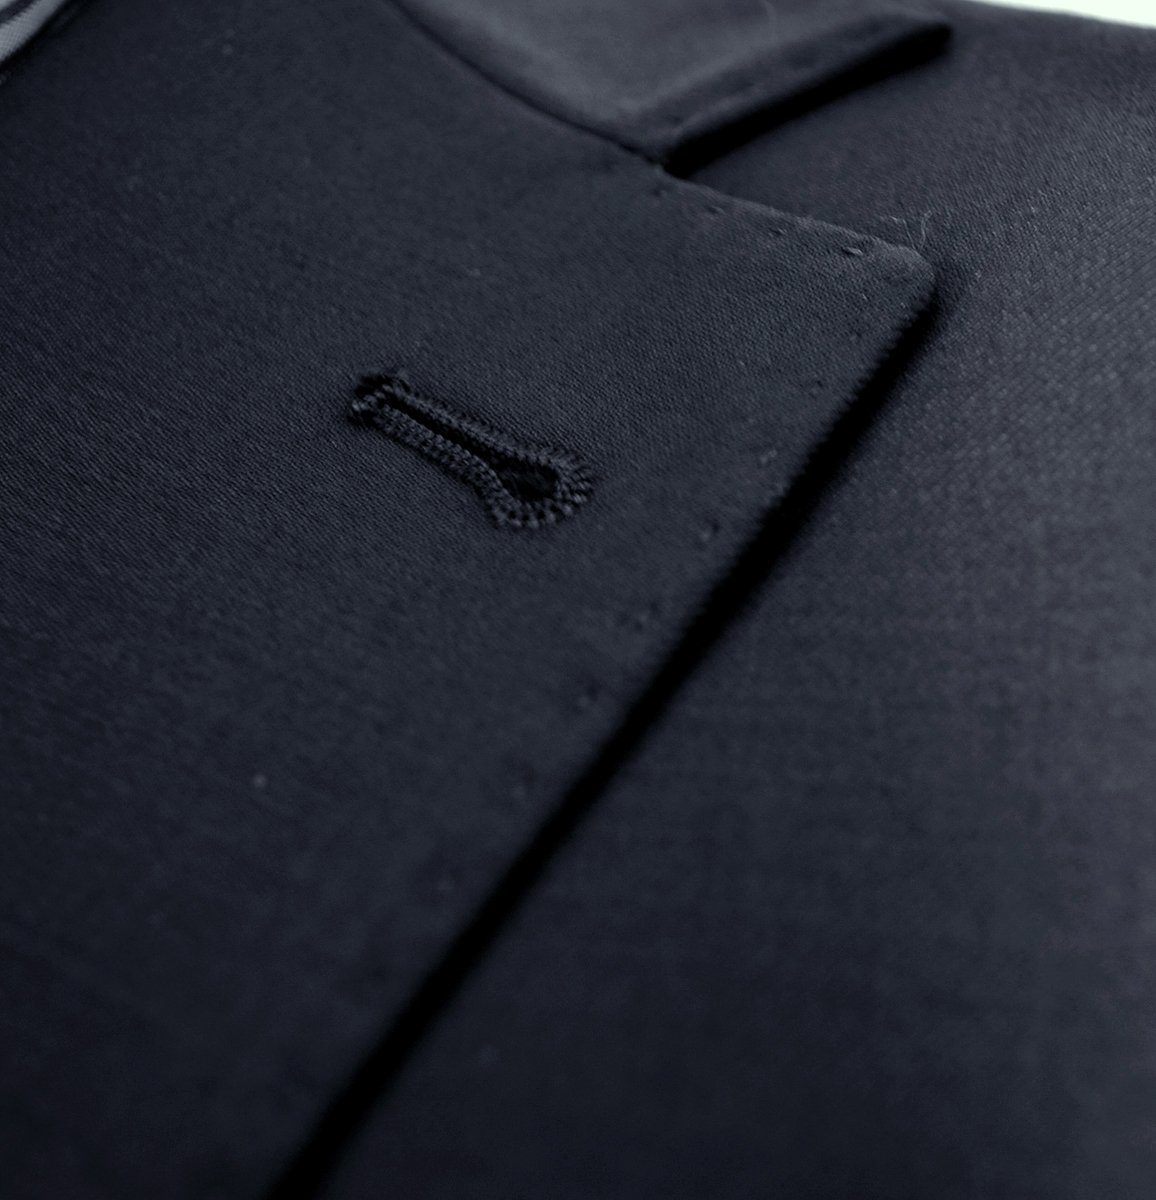 Solid Black suit fabric